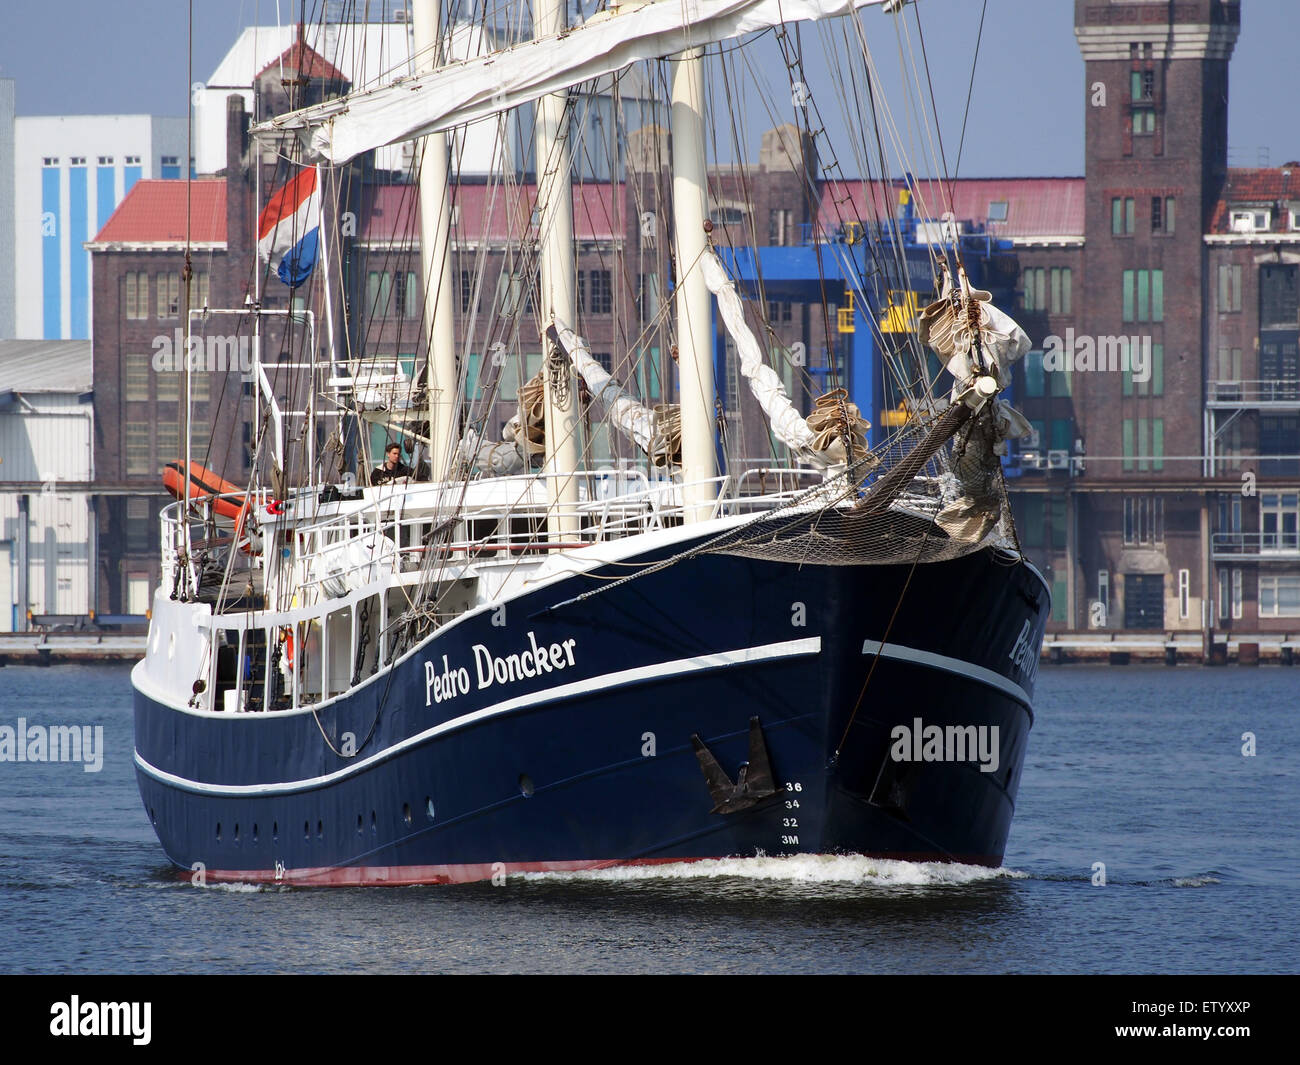 PEDRO DONCKER, IMO 8136154, Noordzeekanaal, port d'Amsterdam, pic4 Banque D'Images